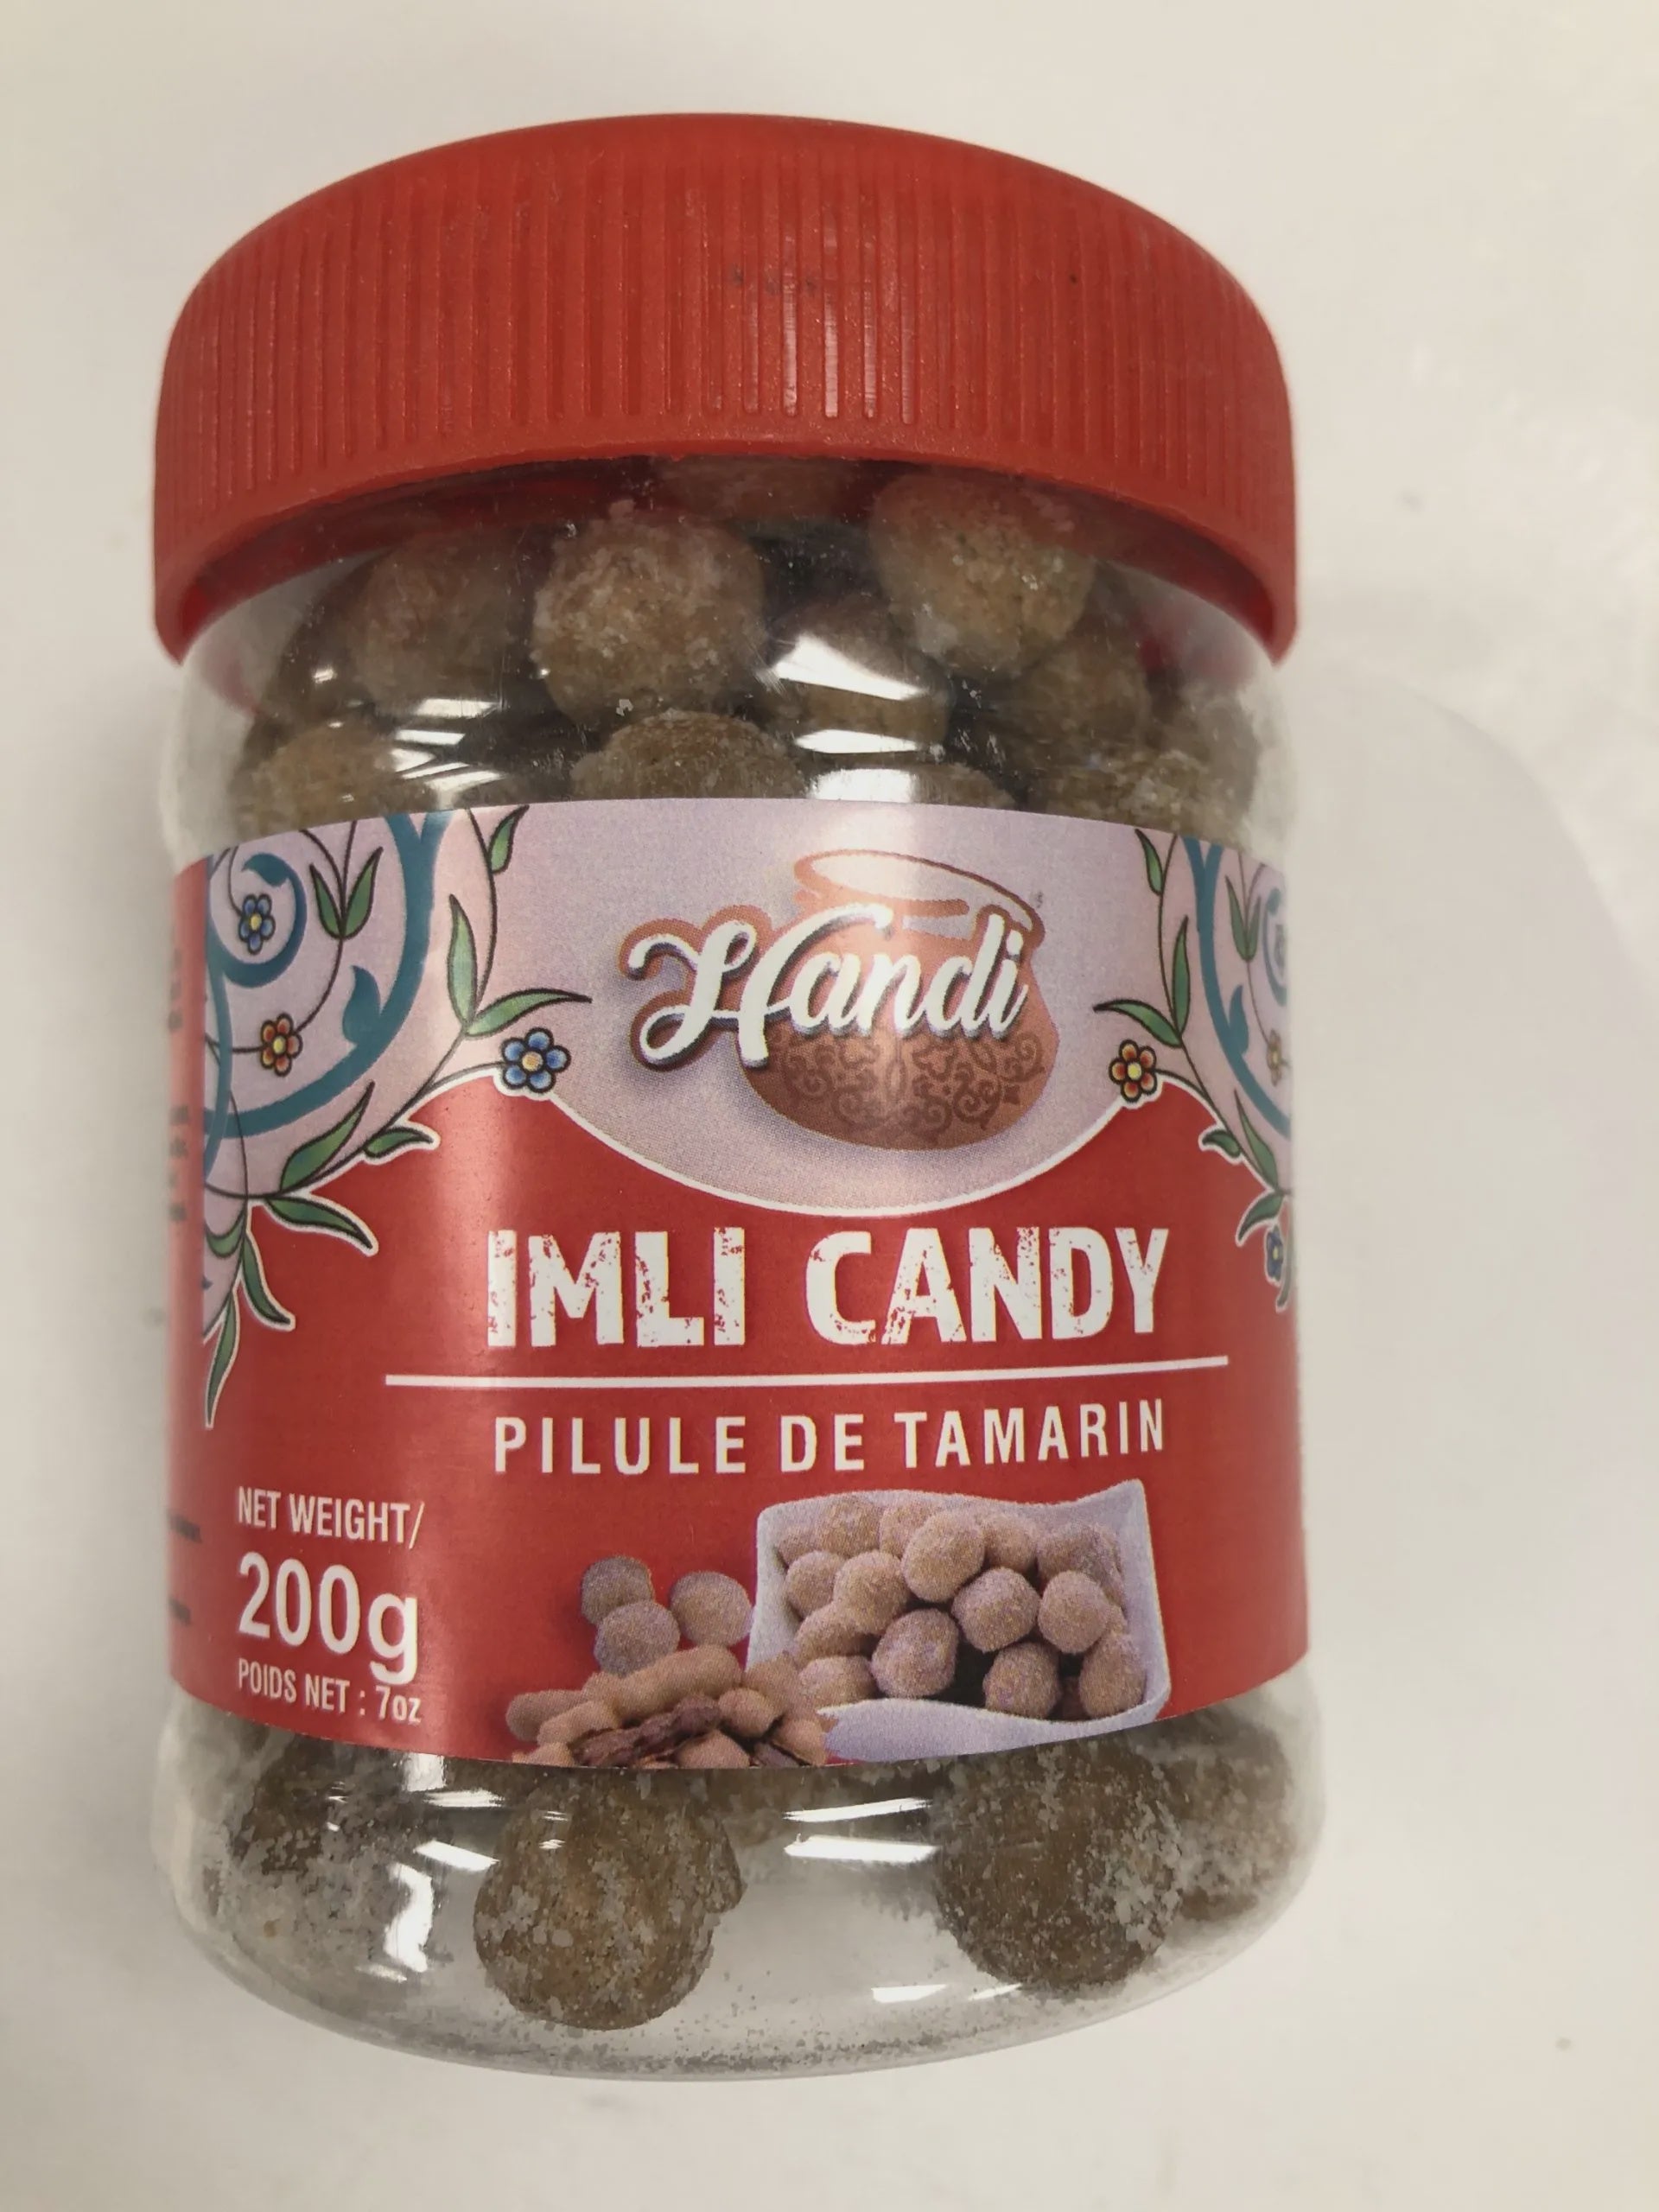 Handi - Imli Candy 200g